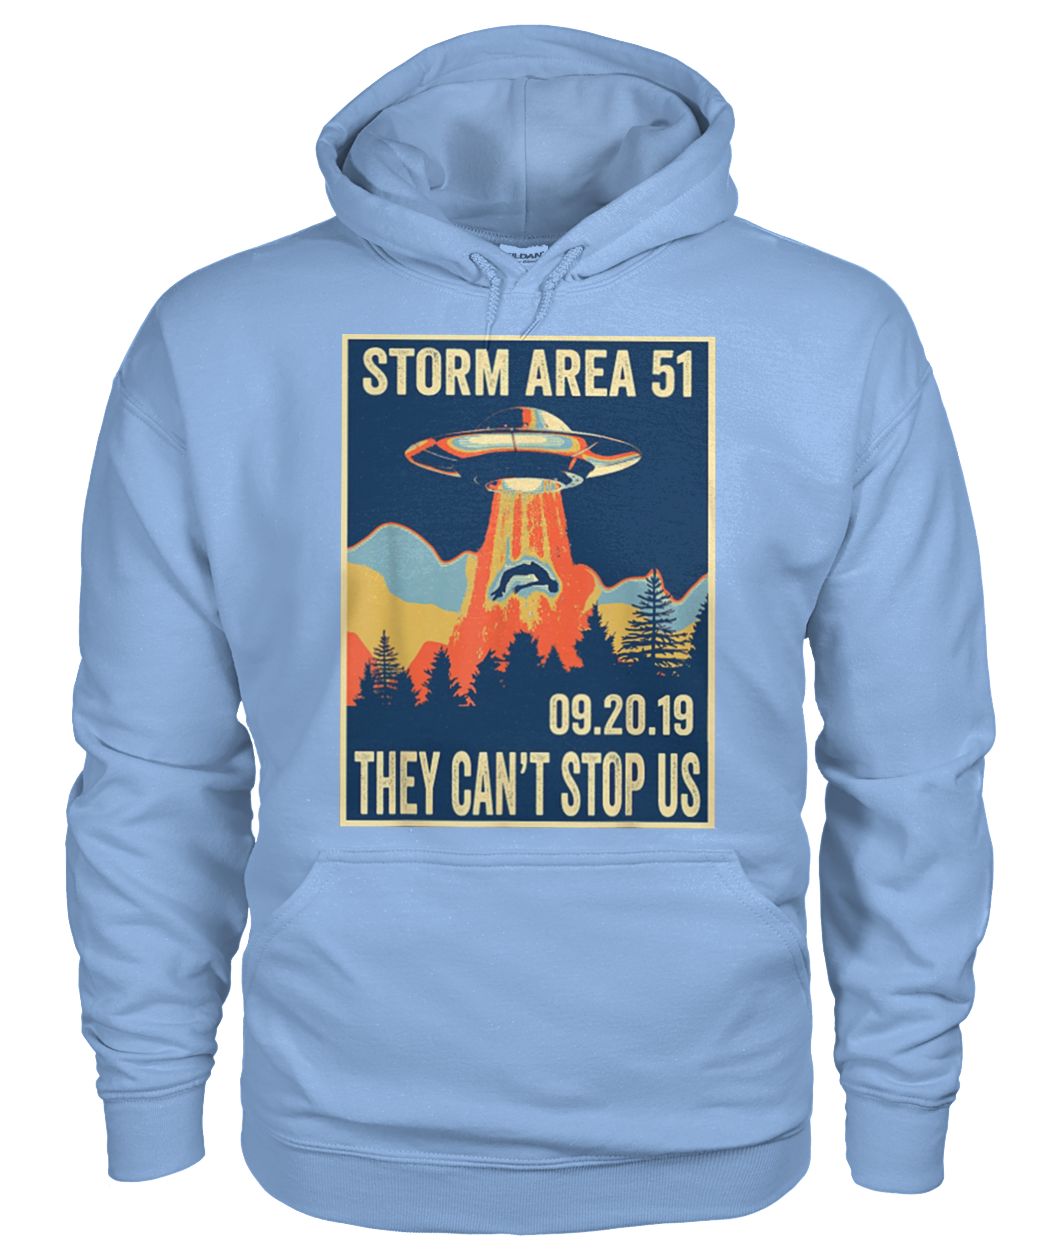 Storm area 51 alien ufo they can't stop us vintage poster gildan hoodie